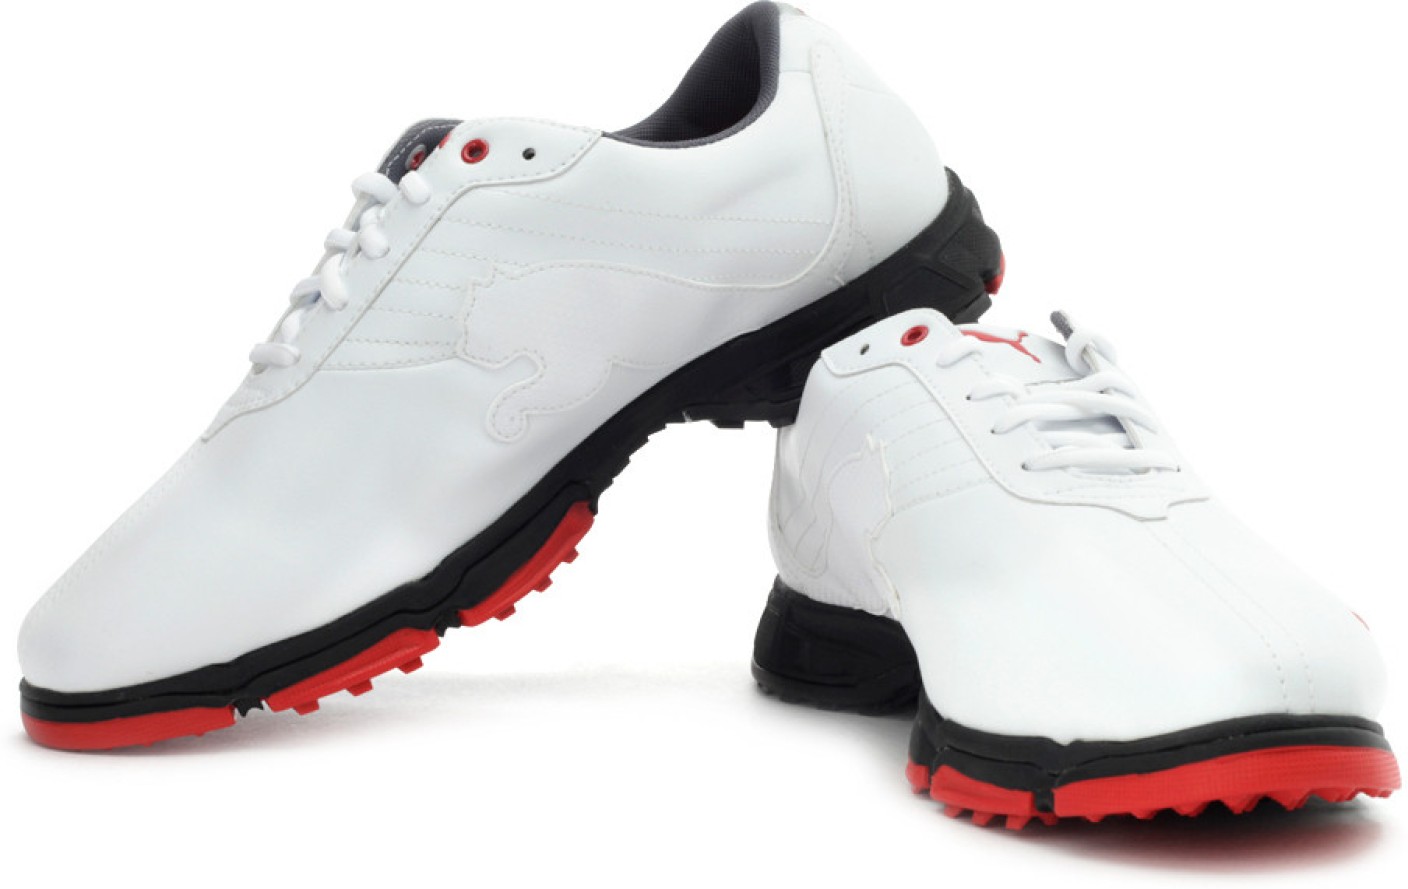 Puma Amp Scramble XW Golf Shoes For Men - Buy White Color Puma Amp ...